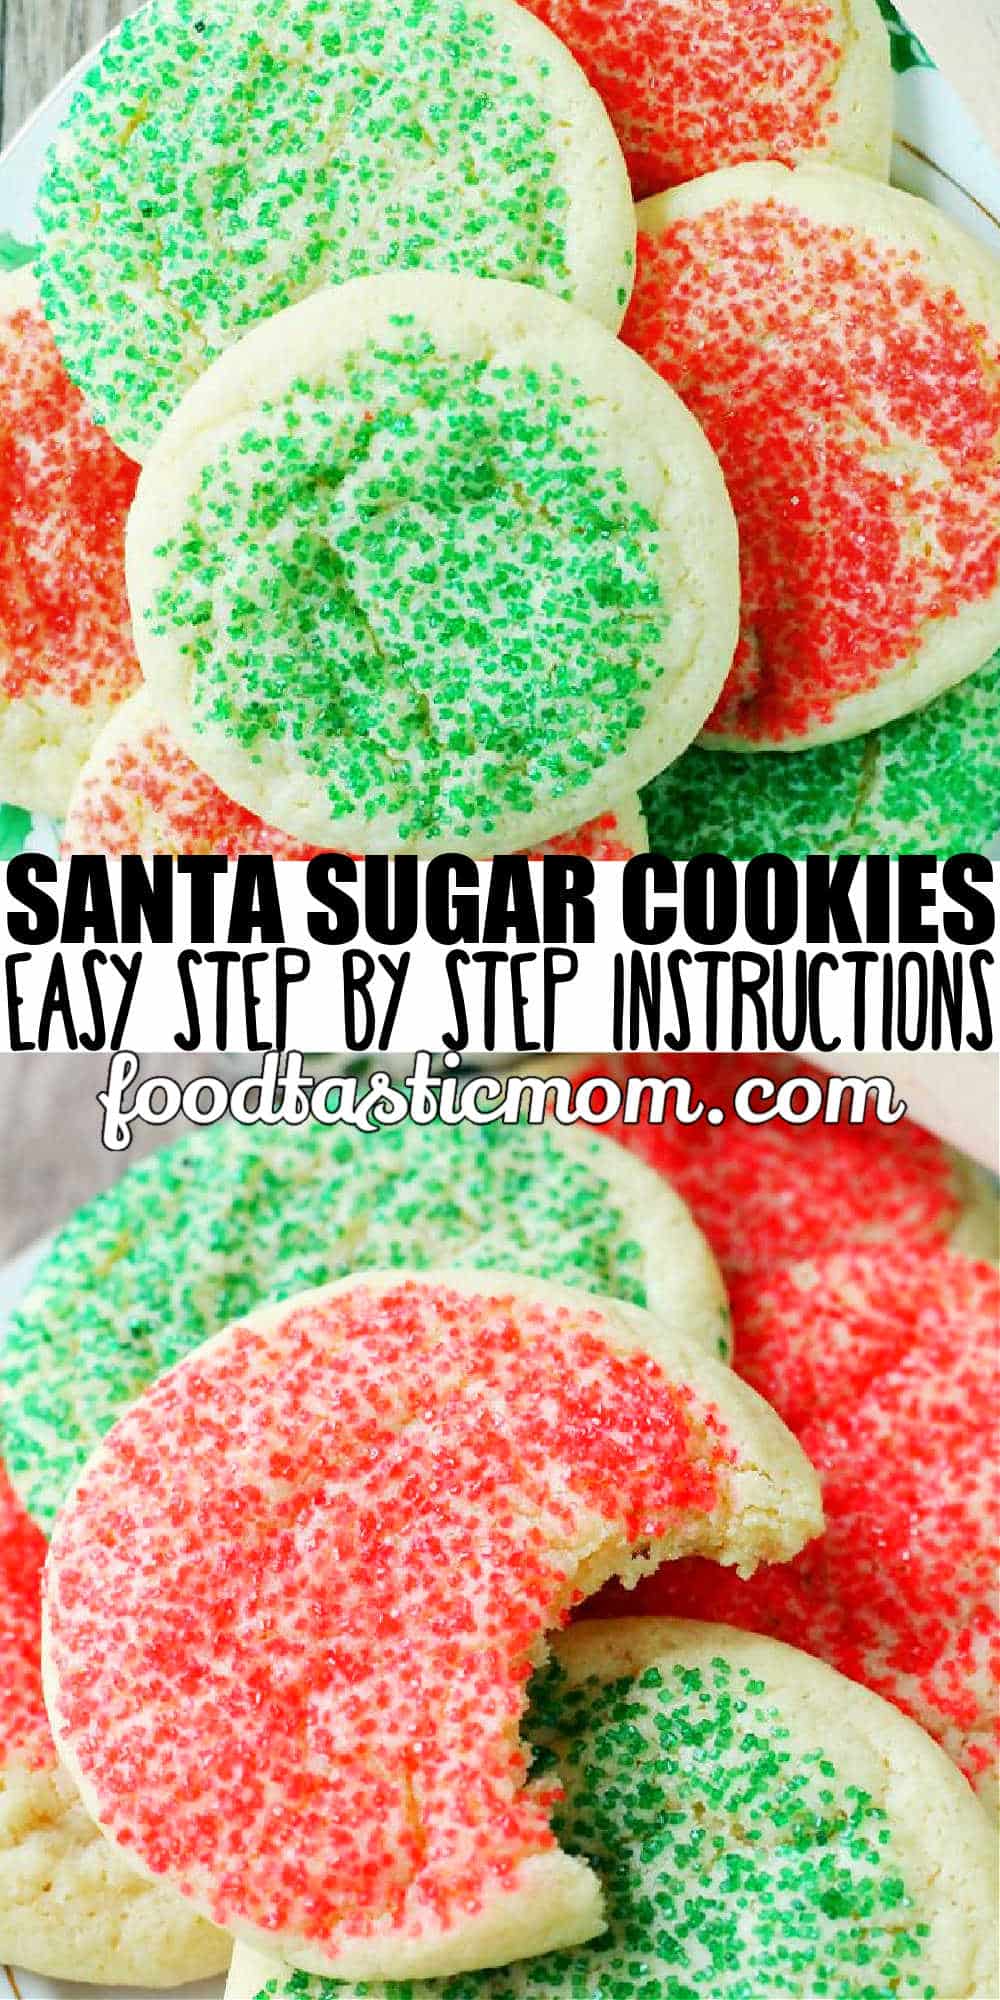 Santa Sugar Cookies help keep my Grandma's memory alive with her sugar cookie recipe each holiday season on the night before Santa's arrival. via @foodtasticmom